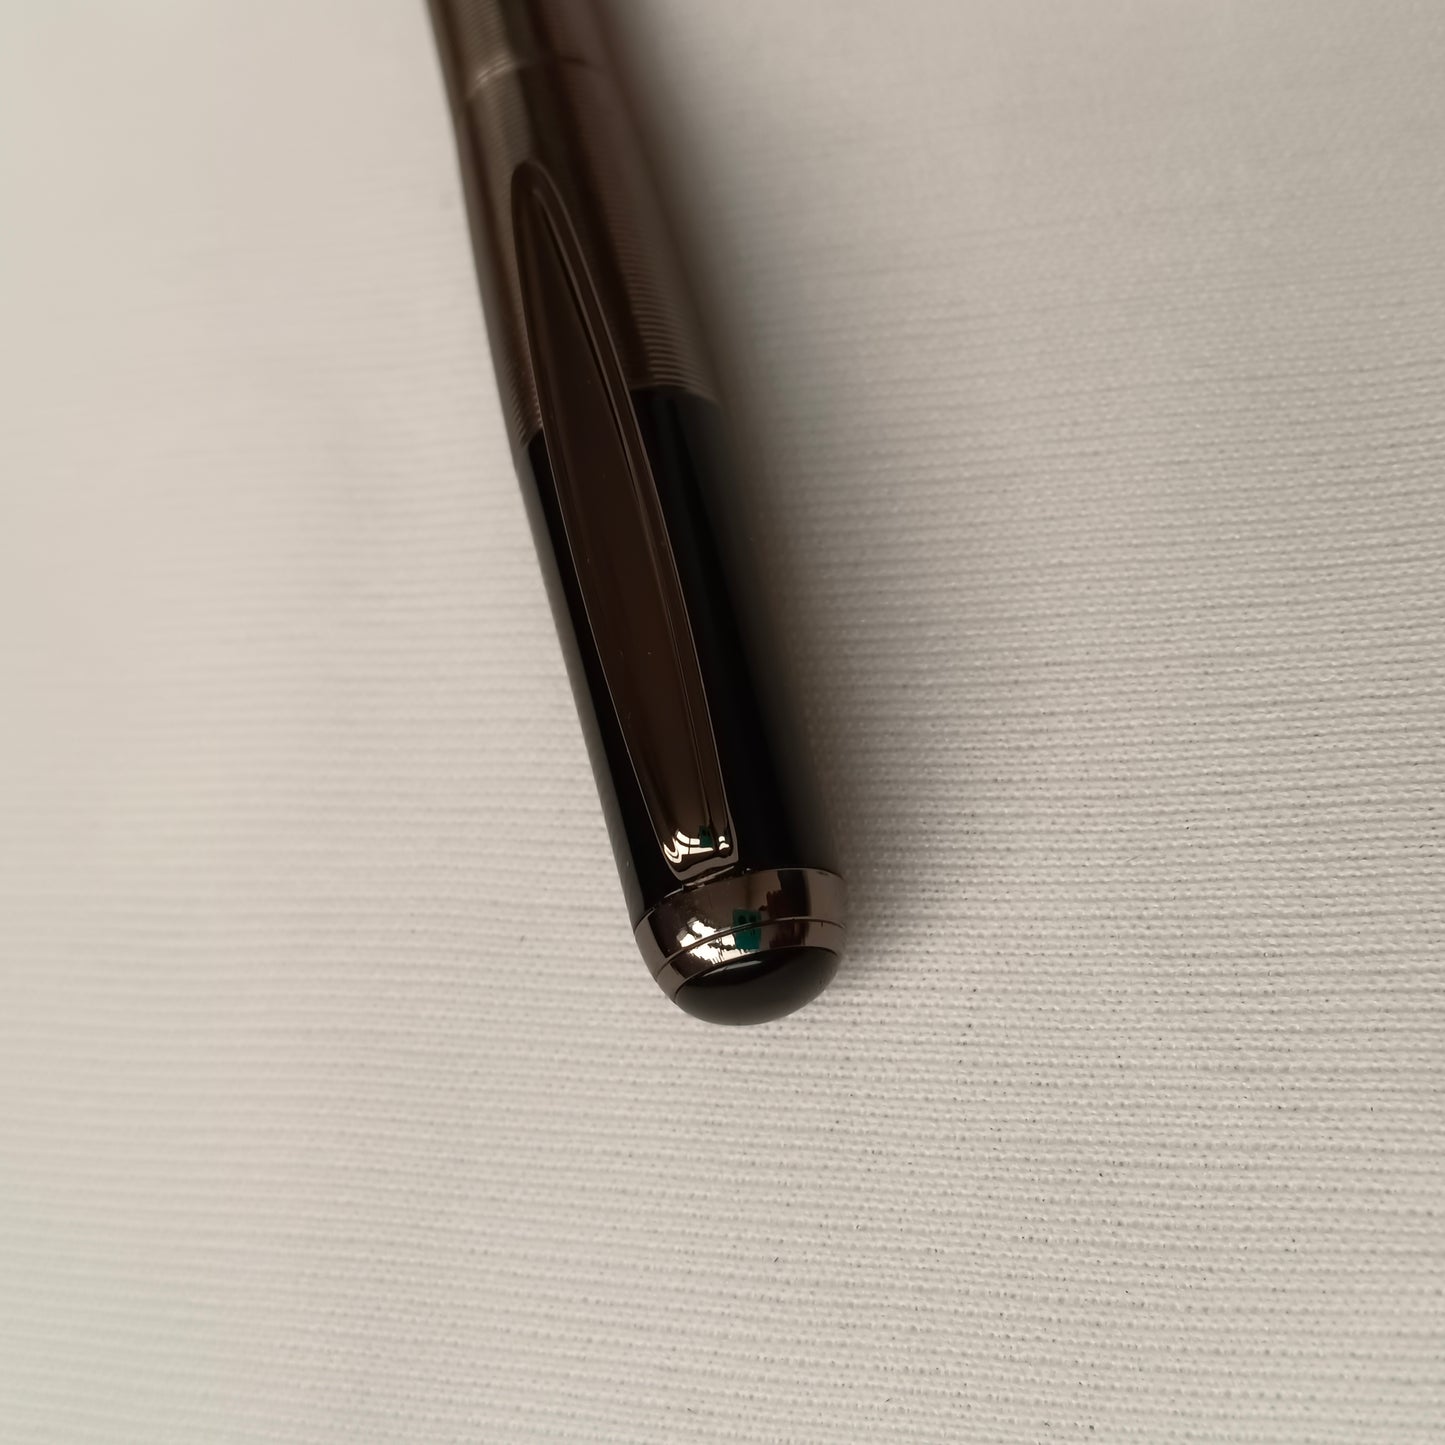 Cerruti 1881 Gunmetal Black Ball Pen